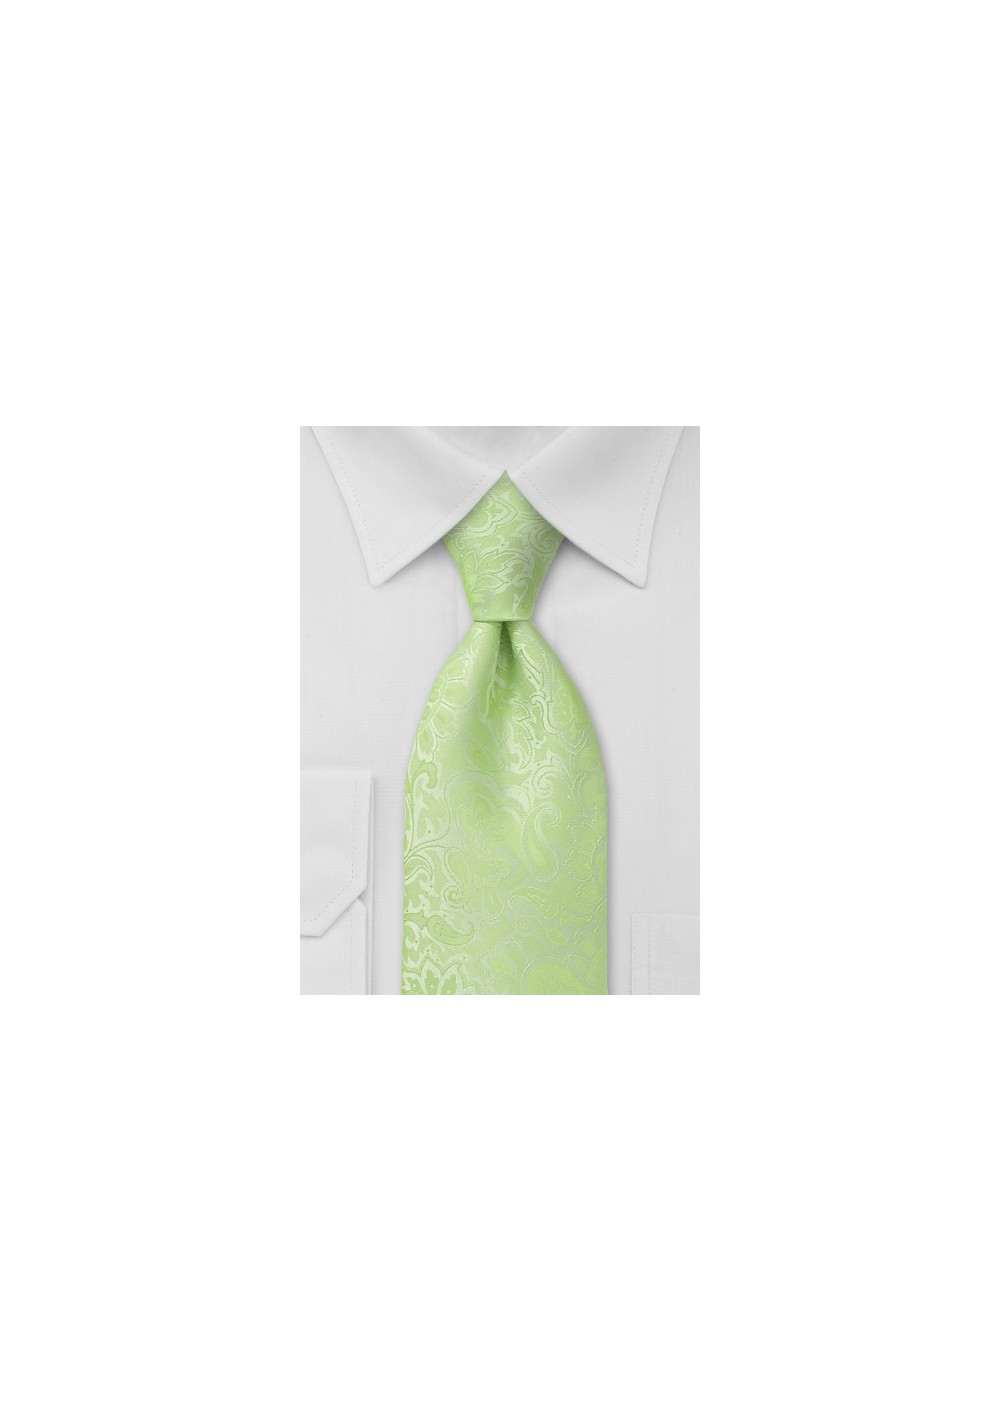 Mint Green Kids Paisley Tie